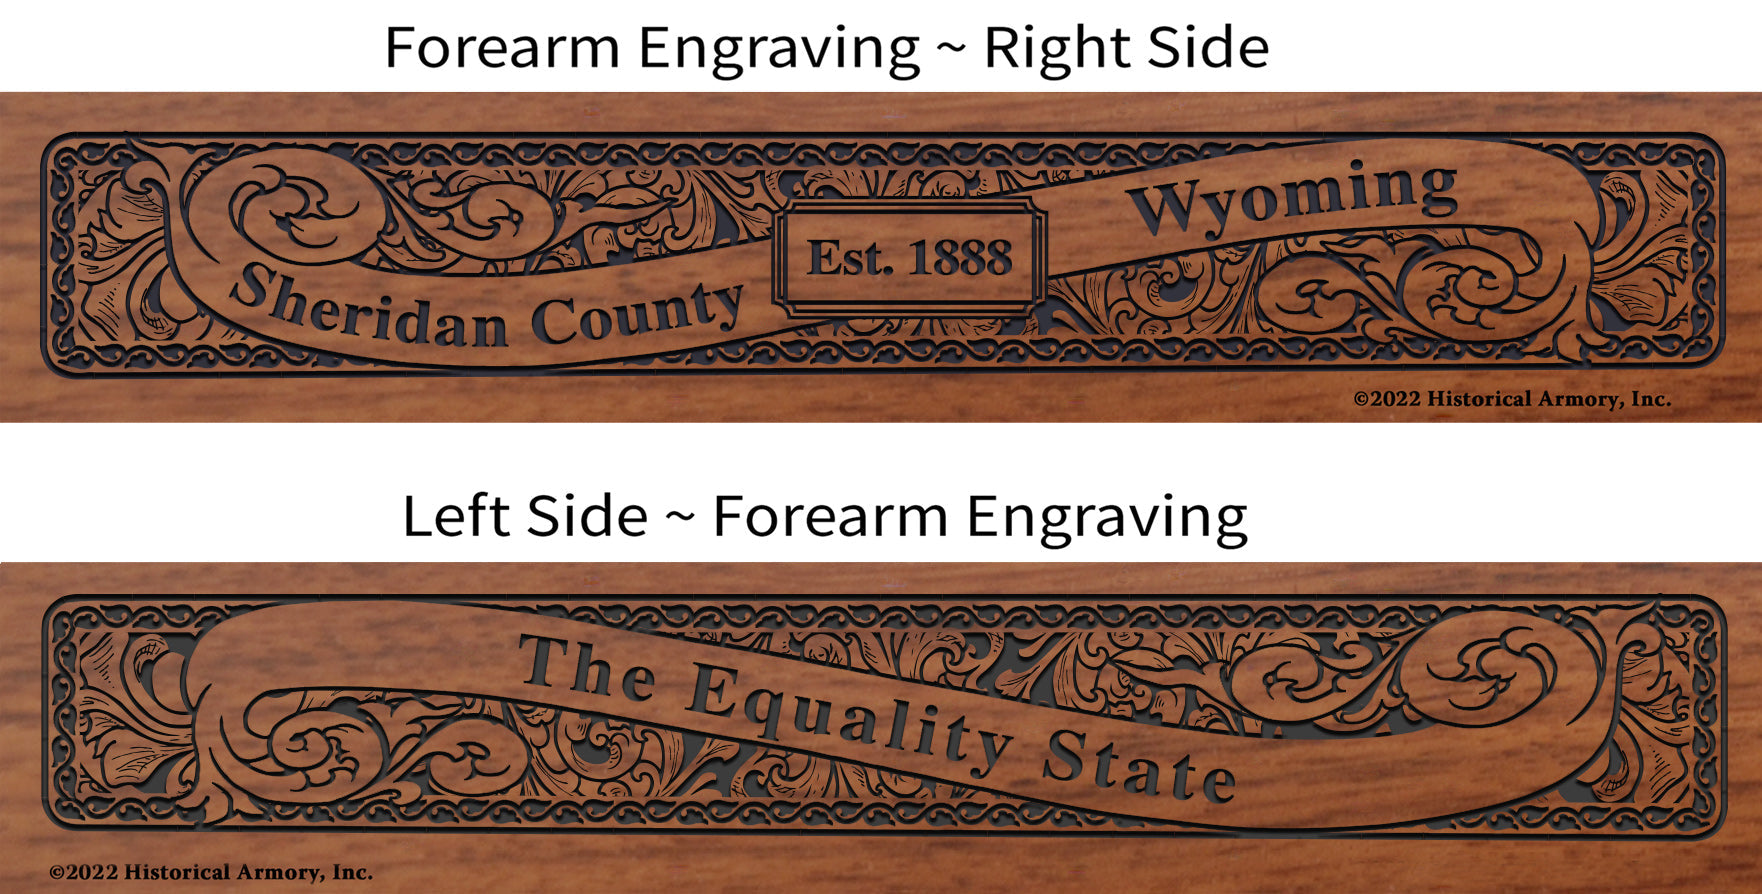 Sheridan County Wyoming Engraved Rifle Forearm